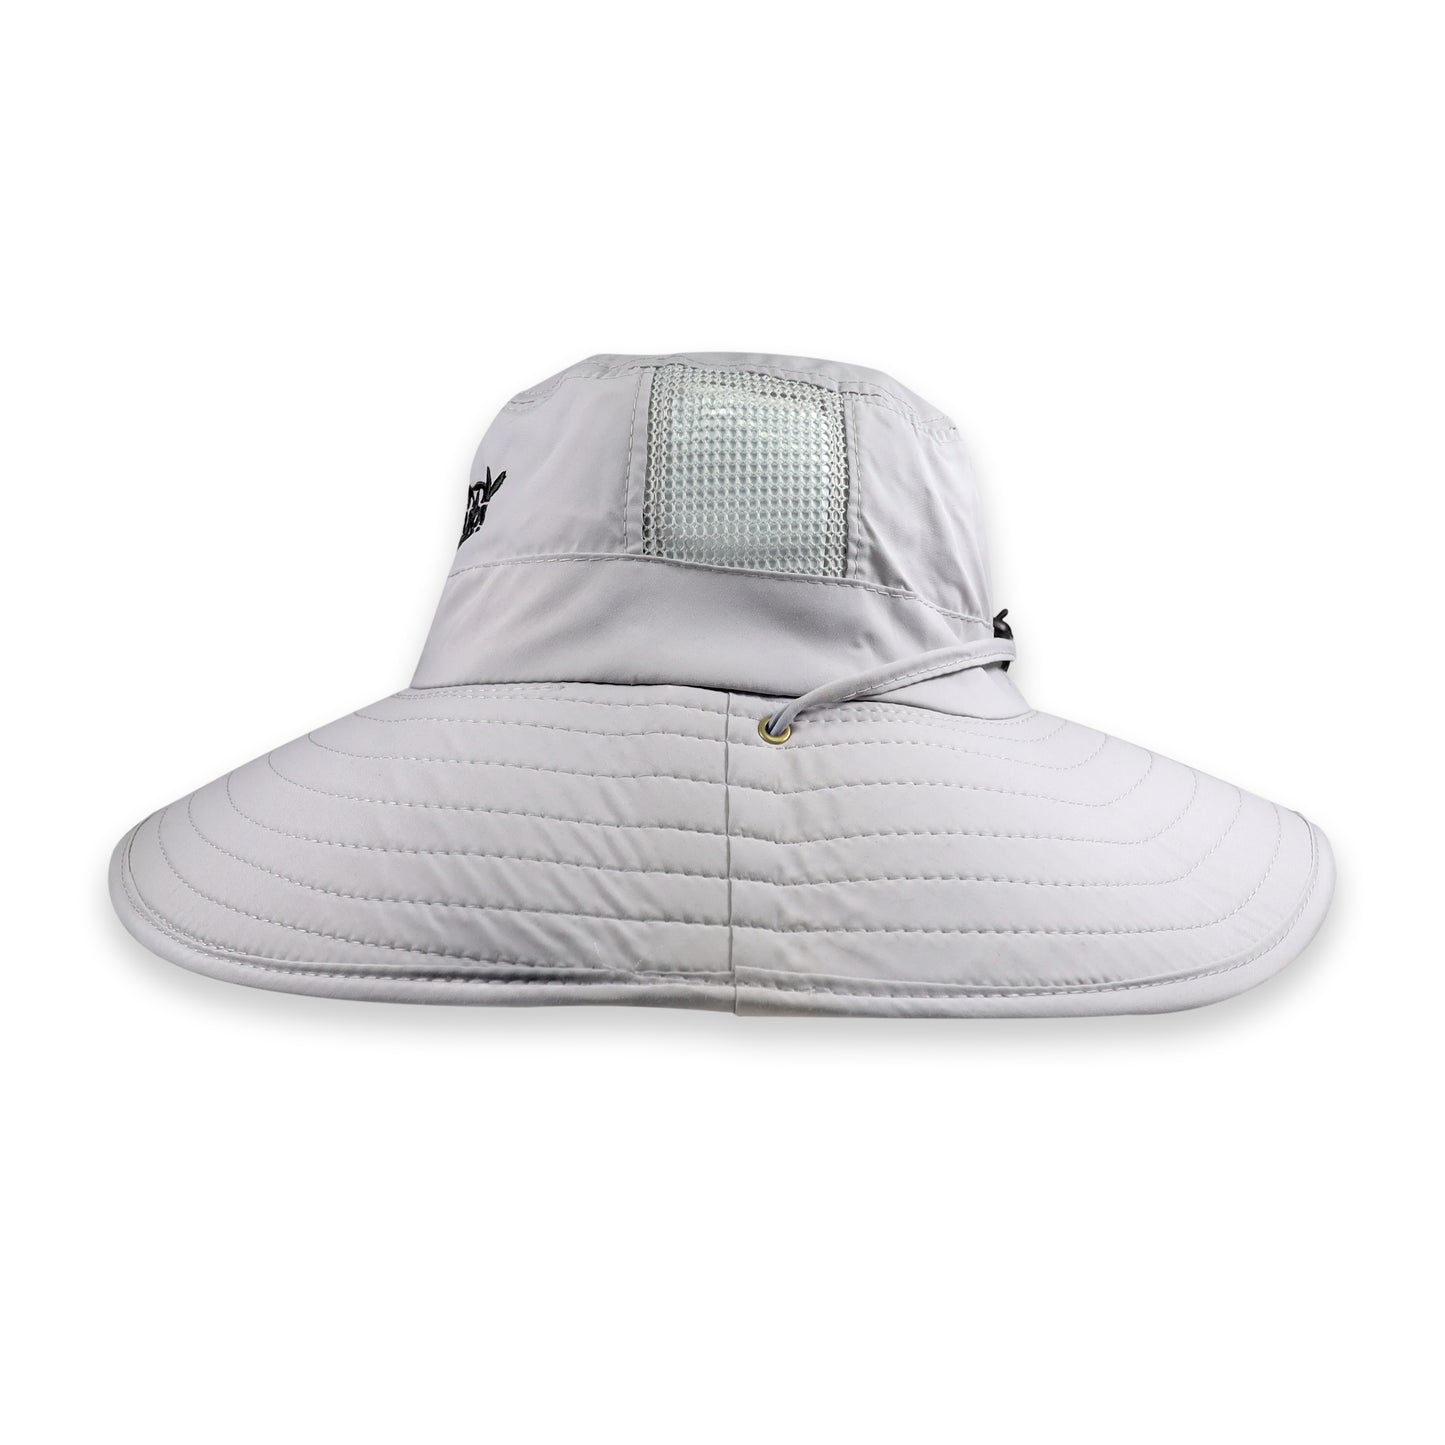 ImportWorx Checkered Sun Hat Embroidered